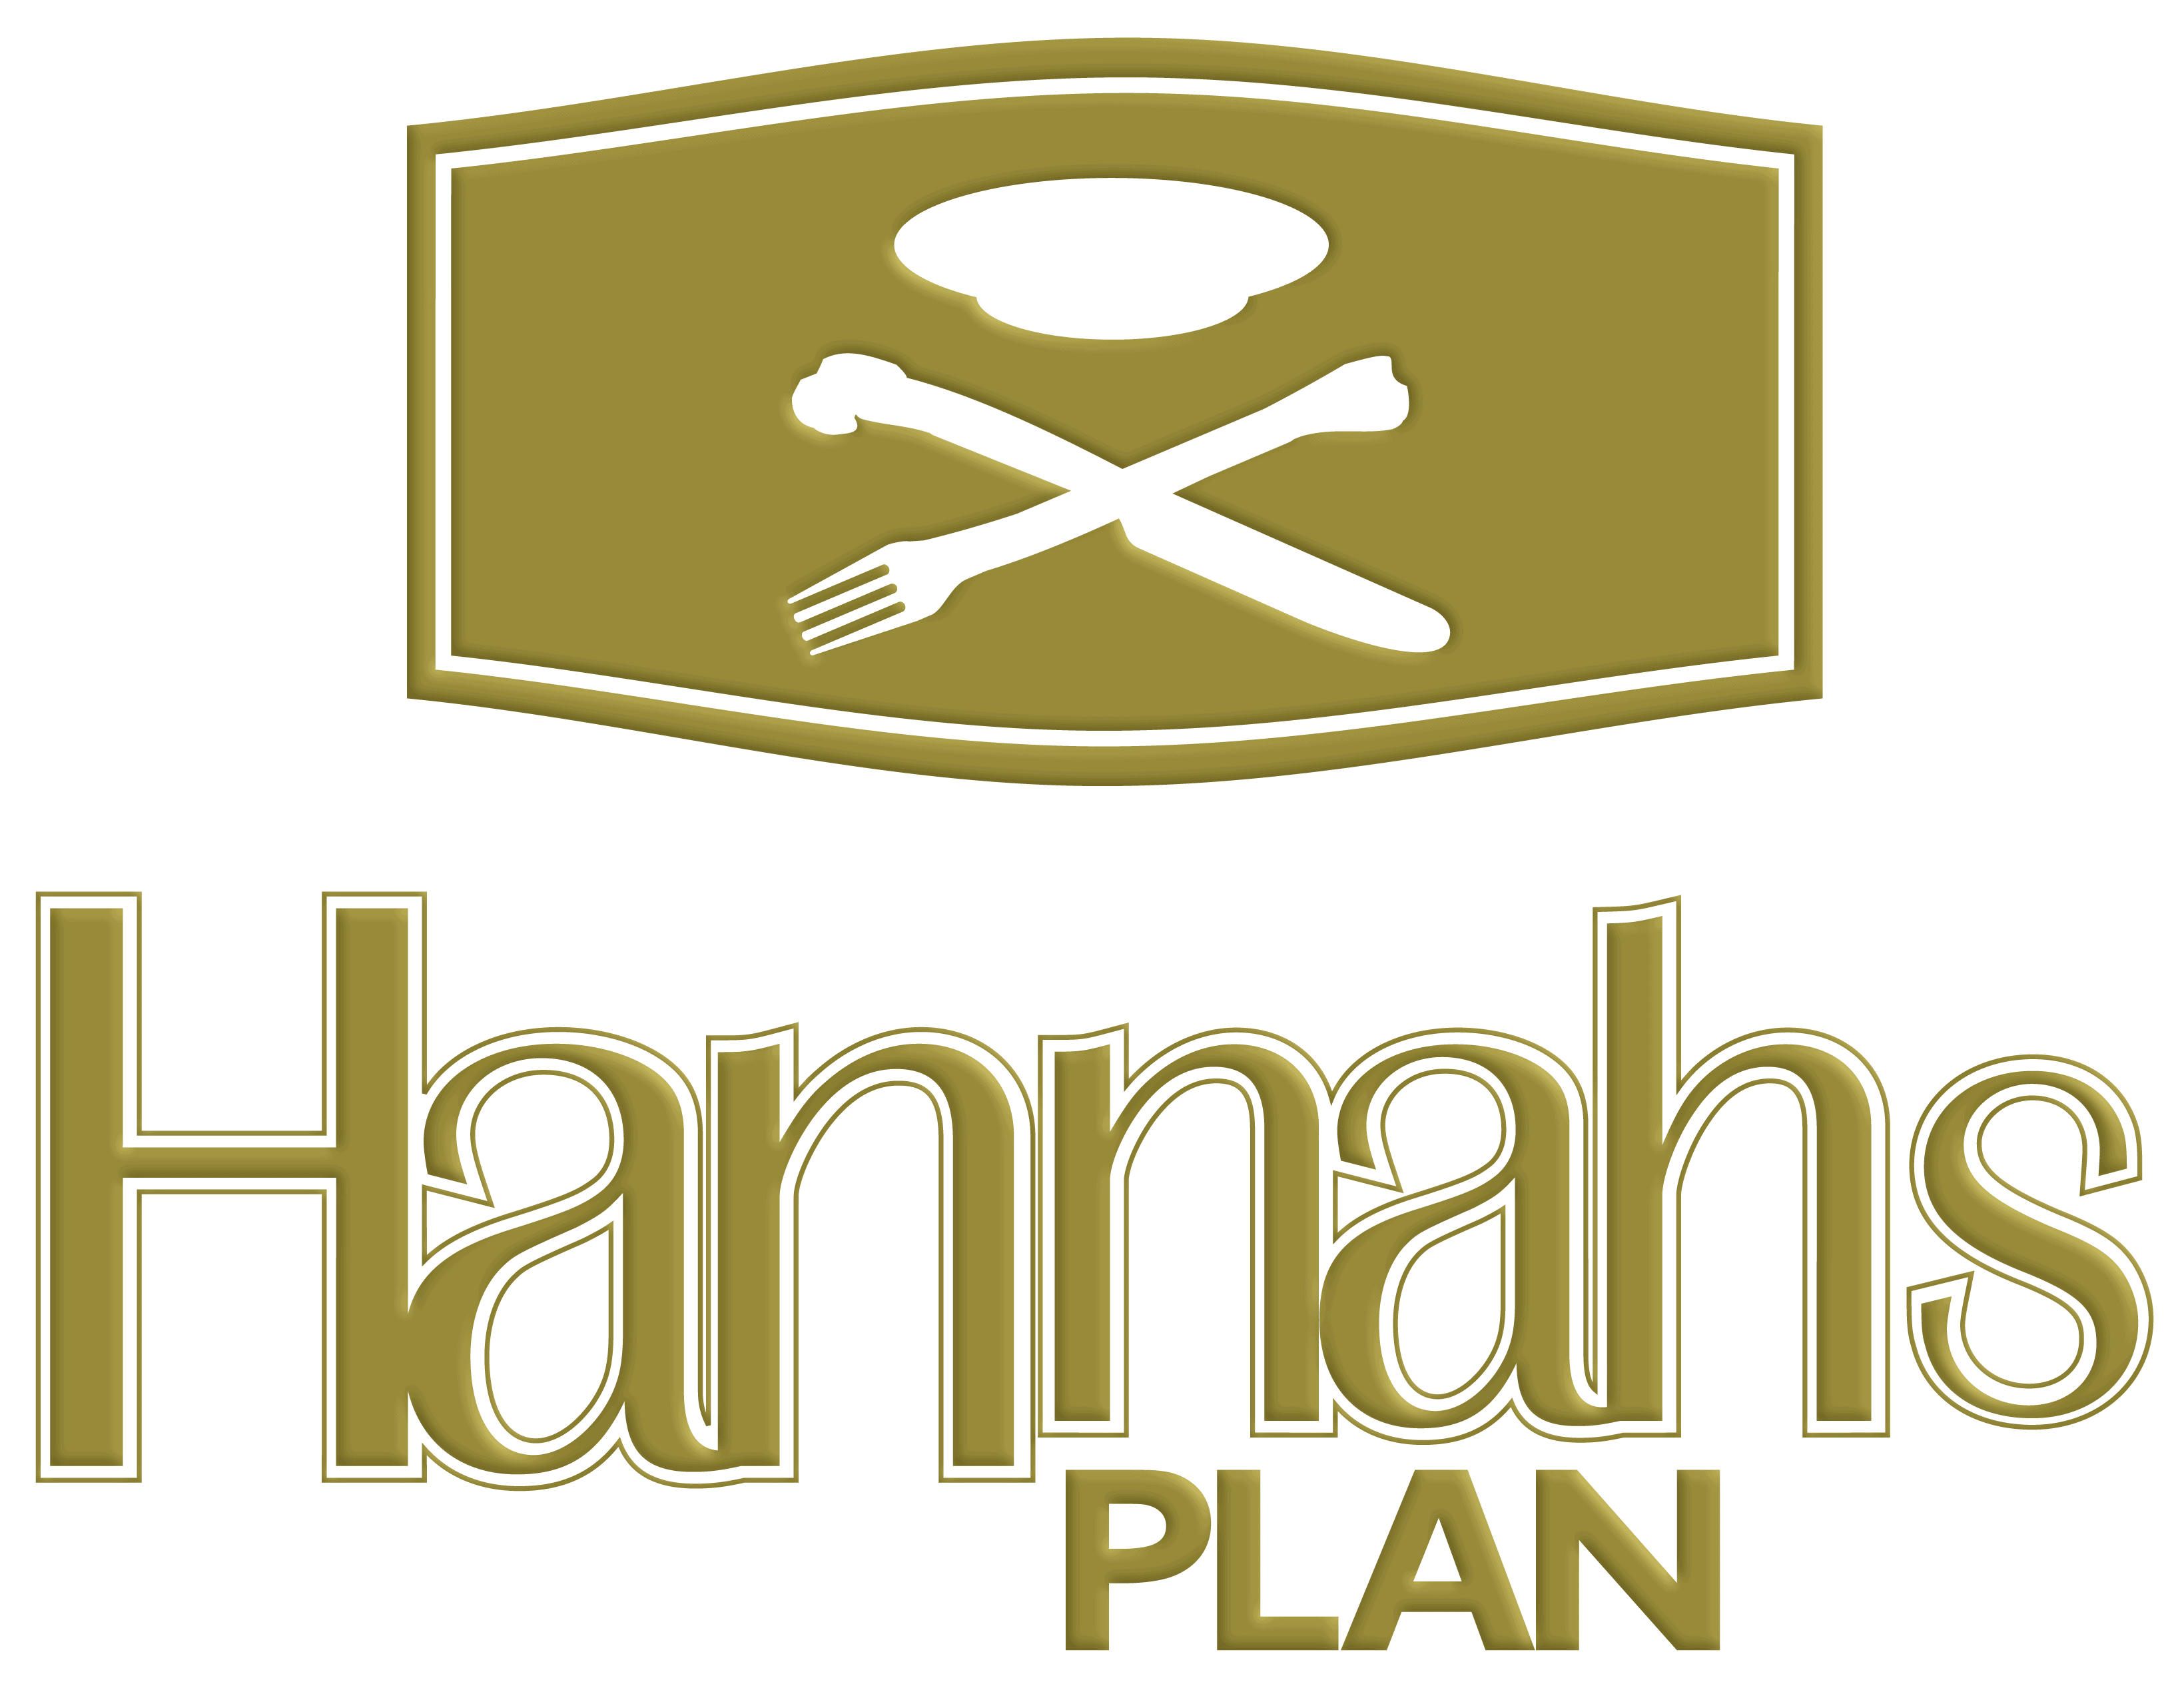 Hannah's plan